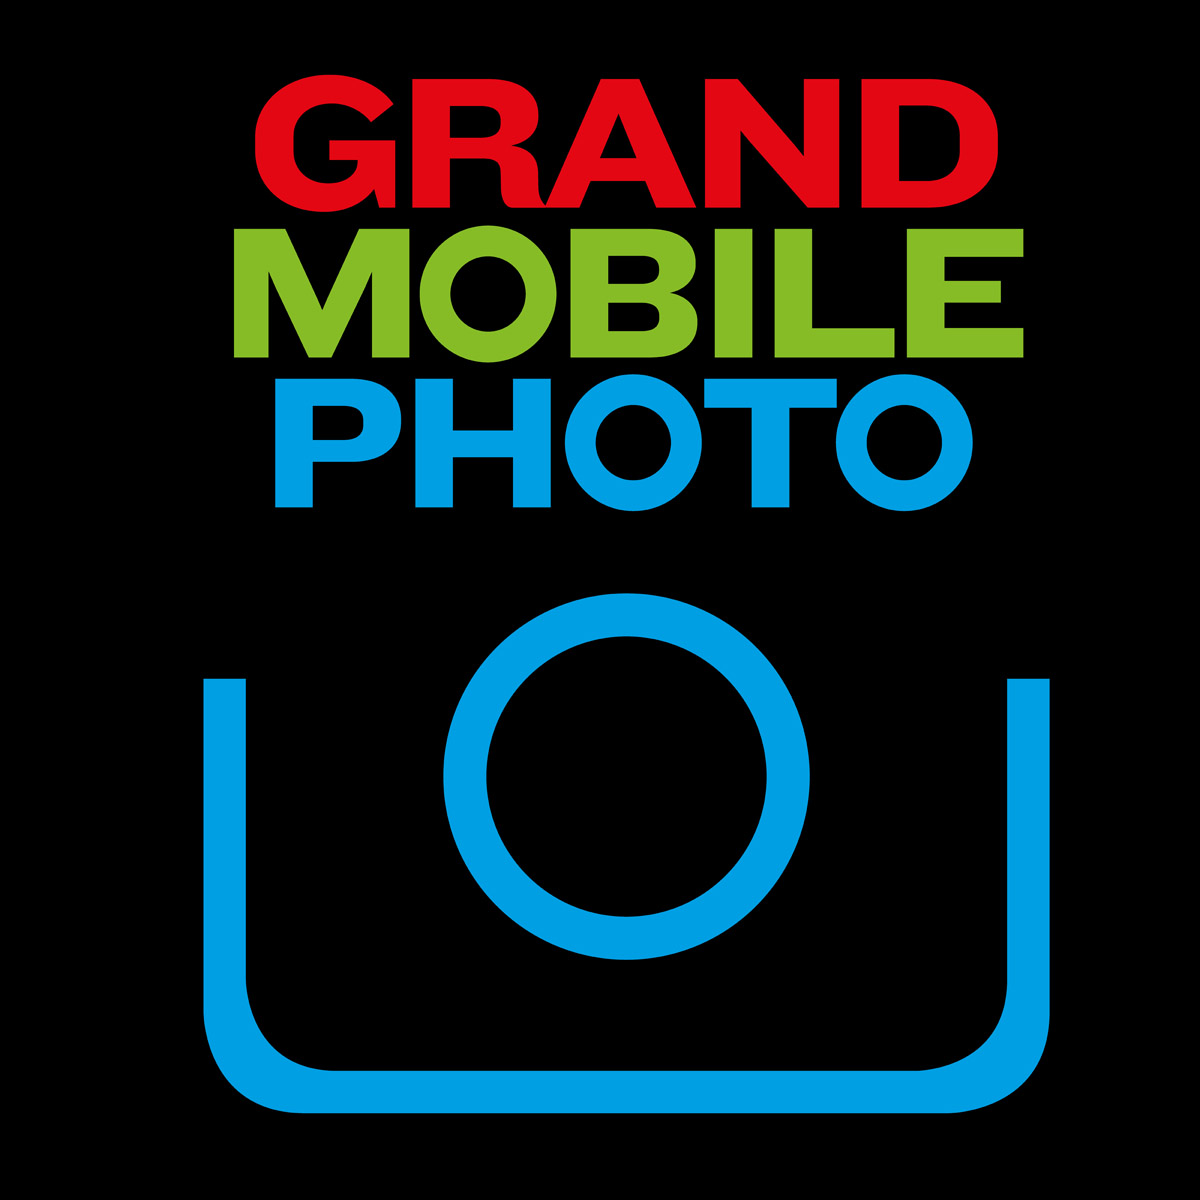 Grand Mobile Photo - zrób zdjcie smartfonem lub tabletem - pula nagród 12 500 euro!